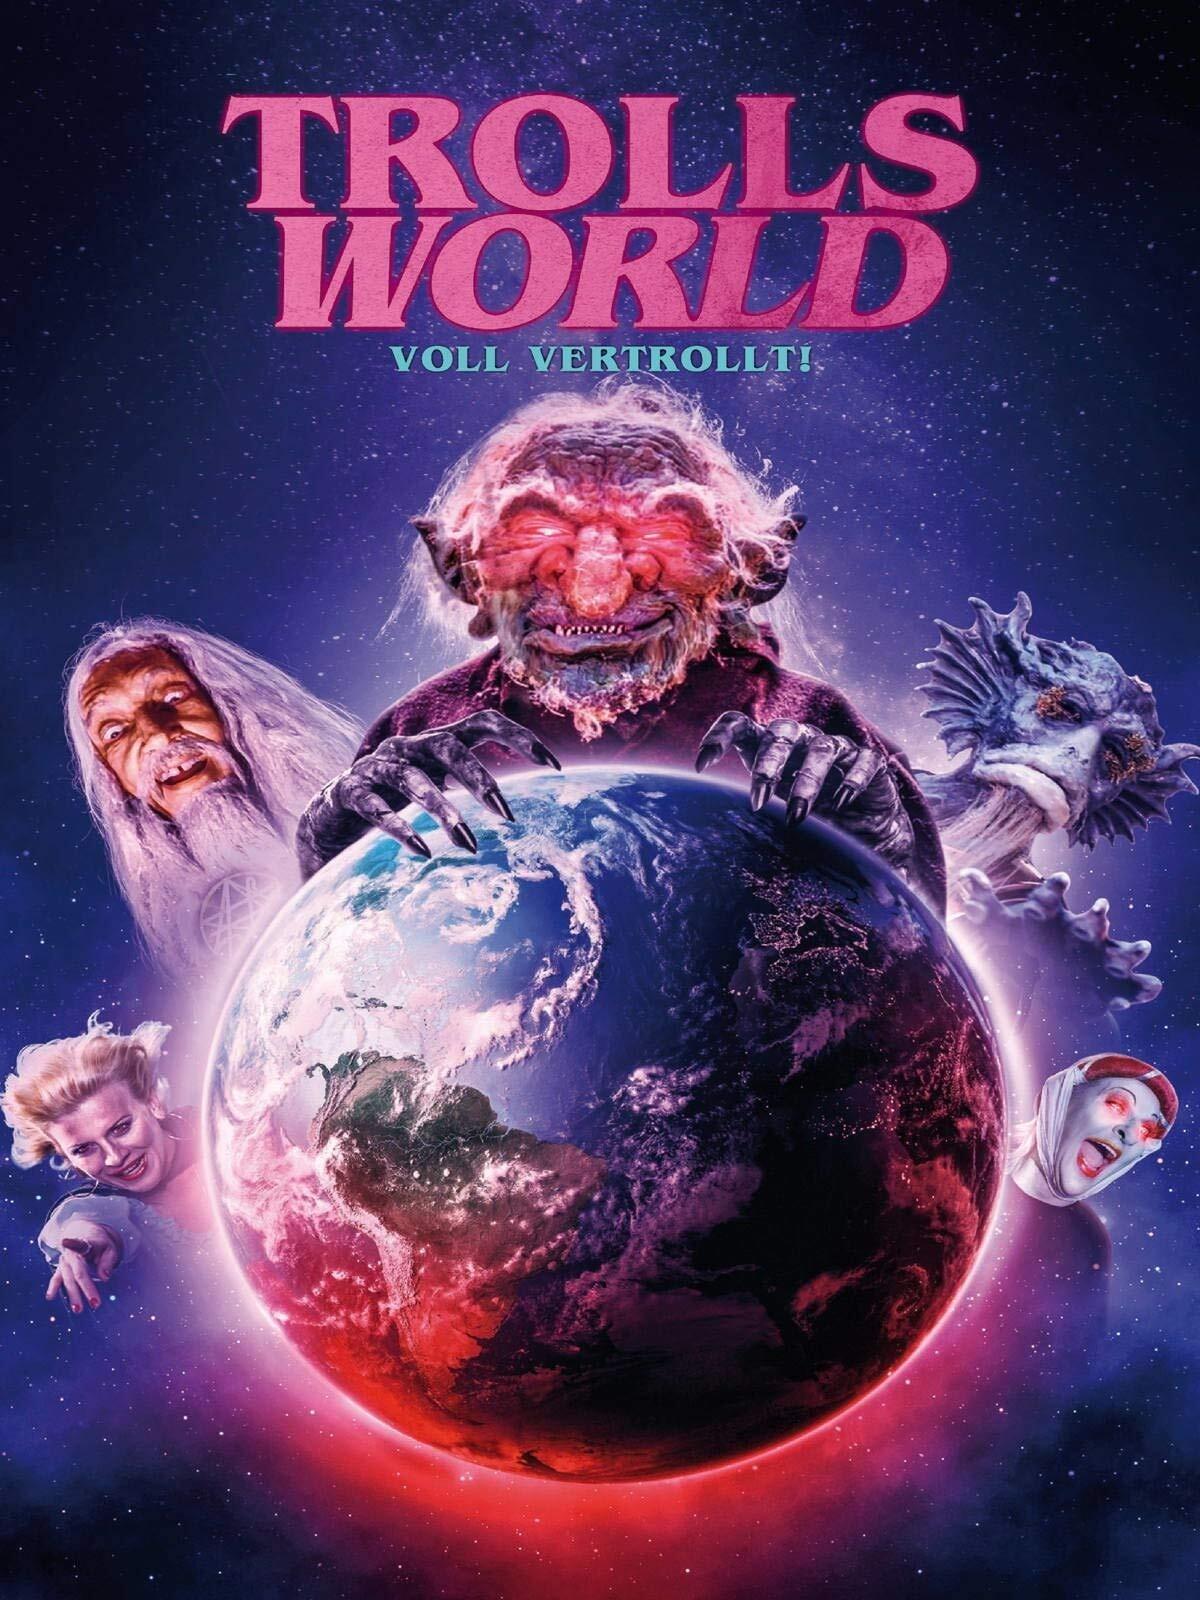 Trolls World - Voll vertrollt poster